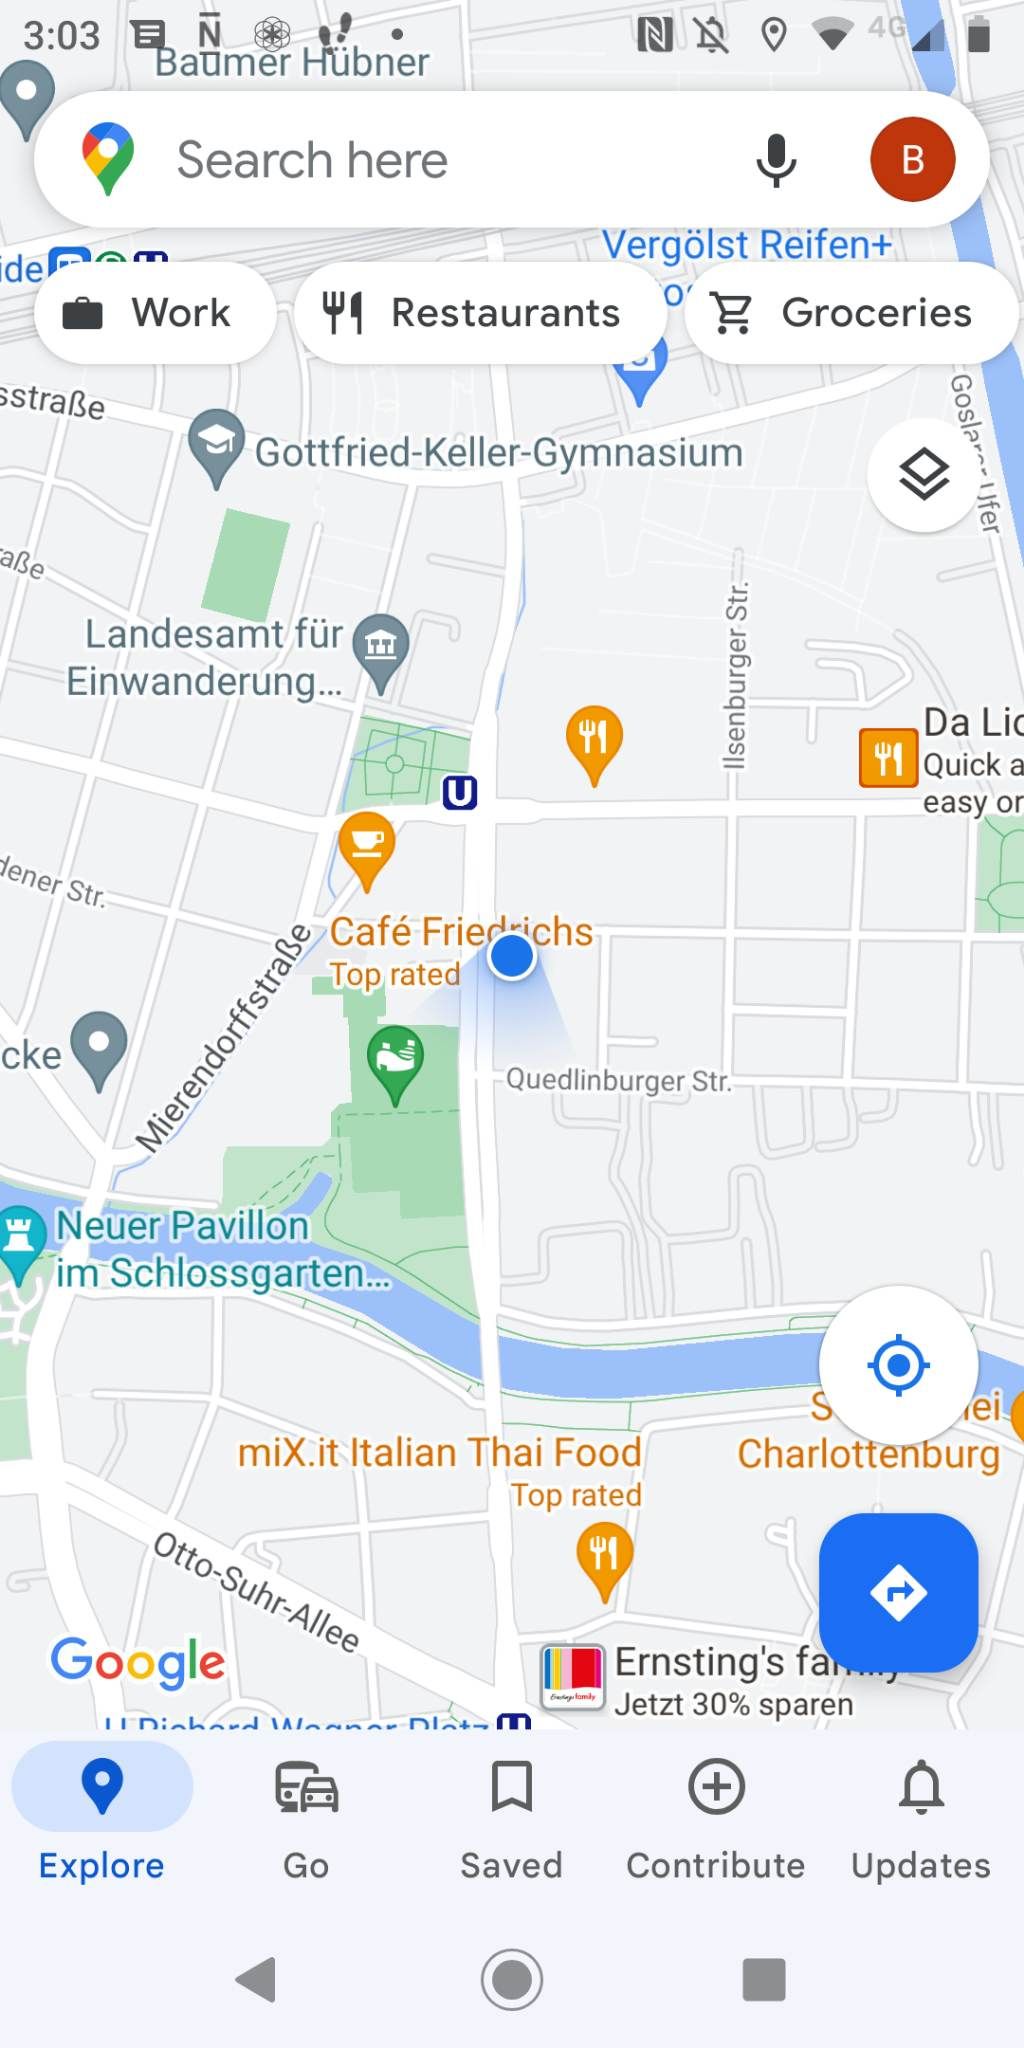 Google maps showing Berlin streets